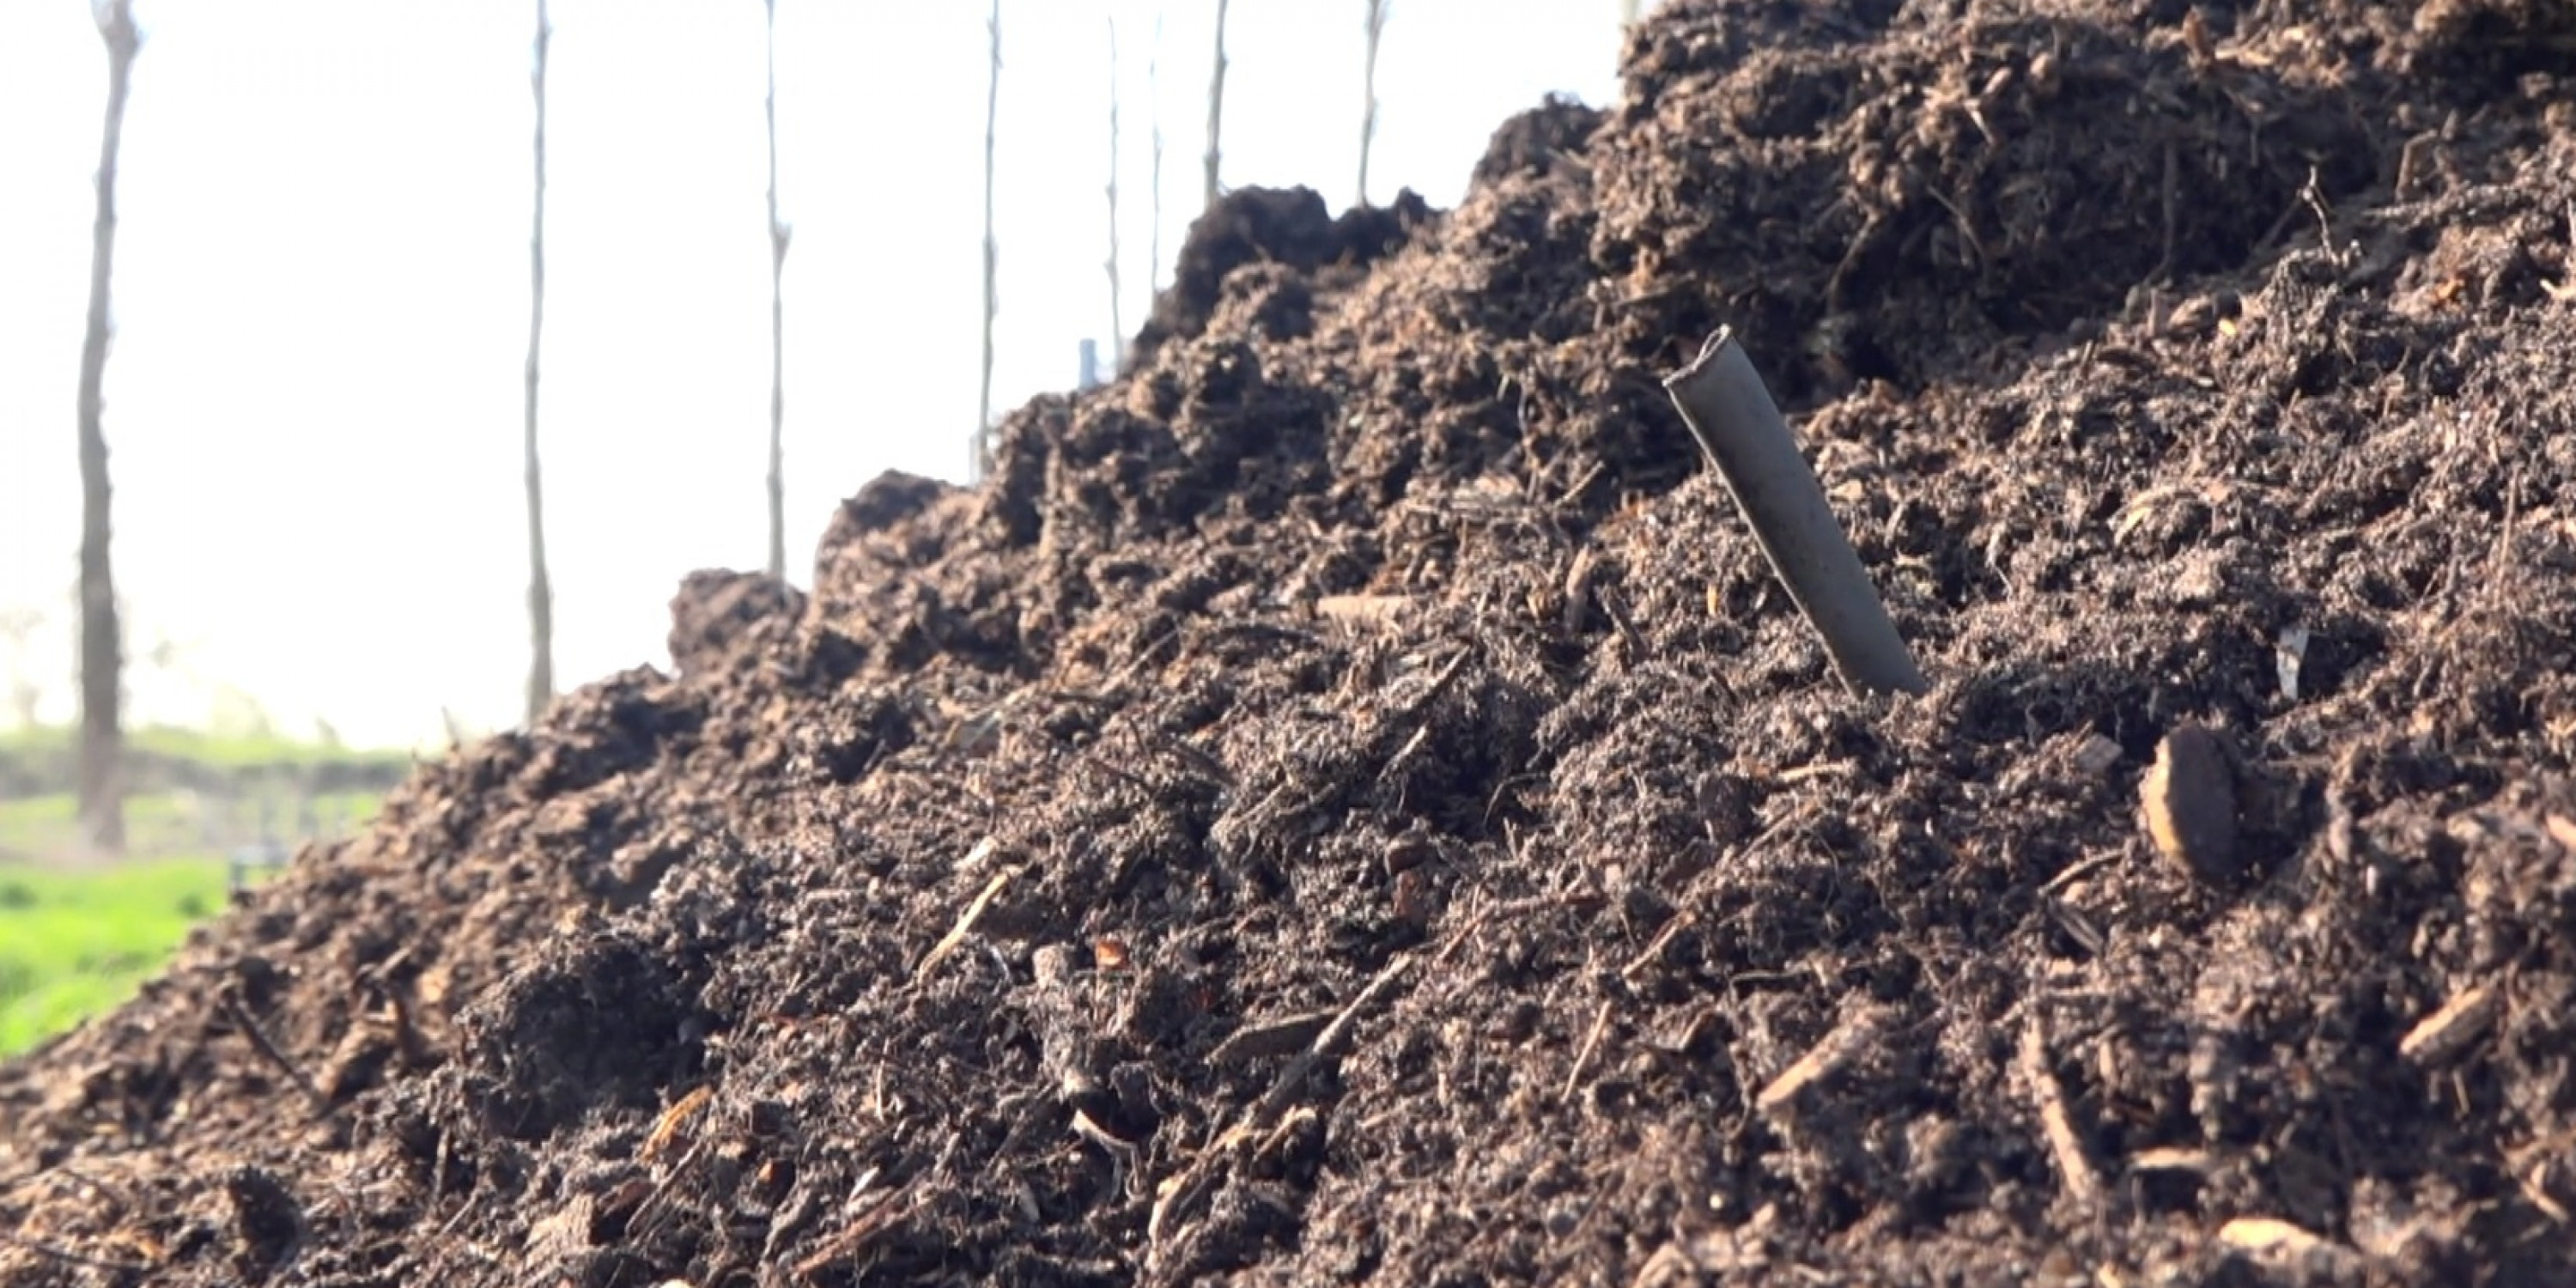 Bio-afbreekbare zakjes vervuilen compost - Nieuws